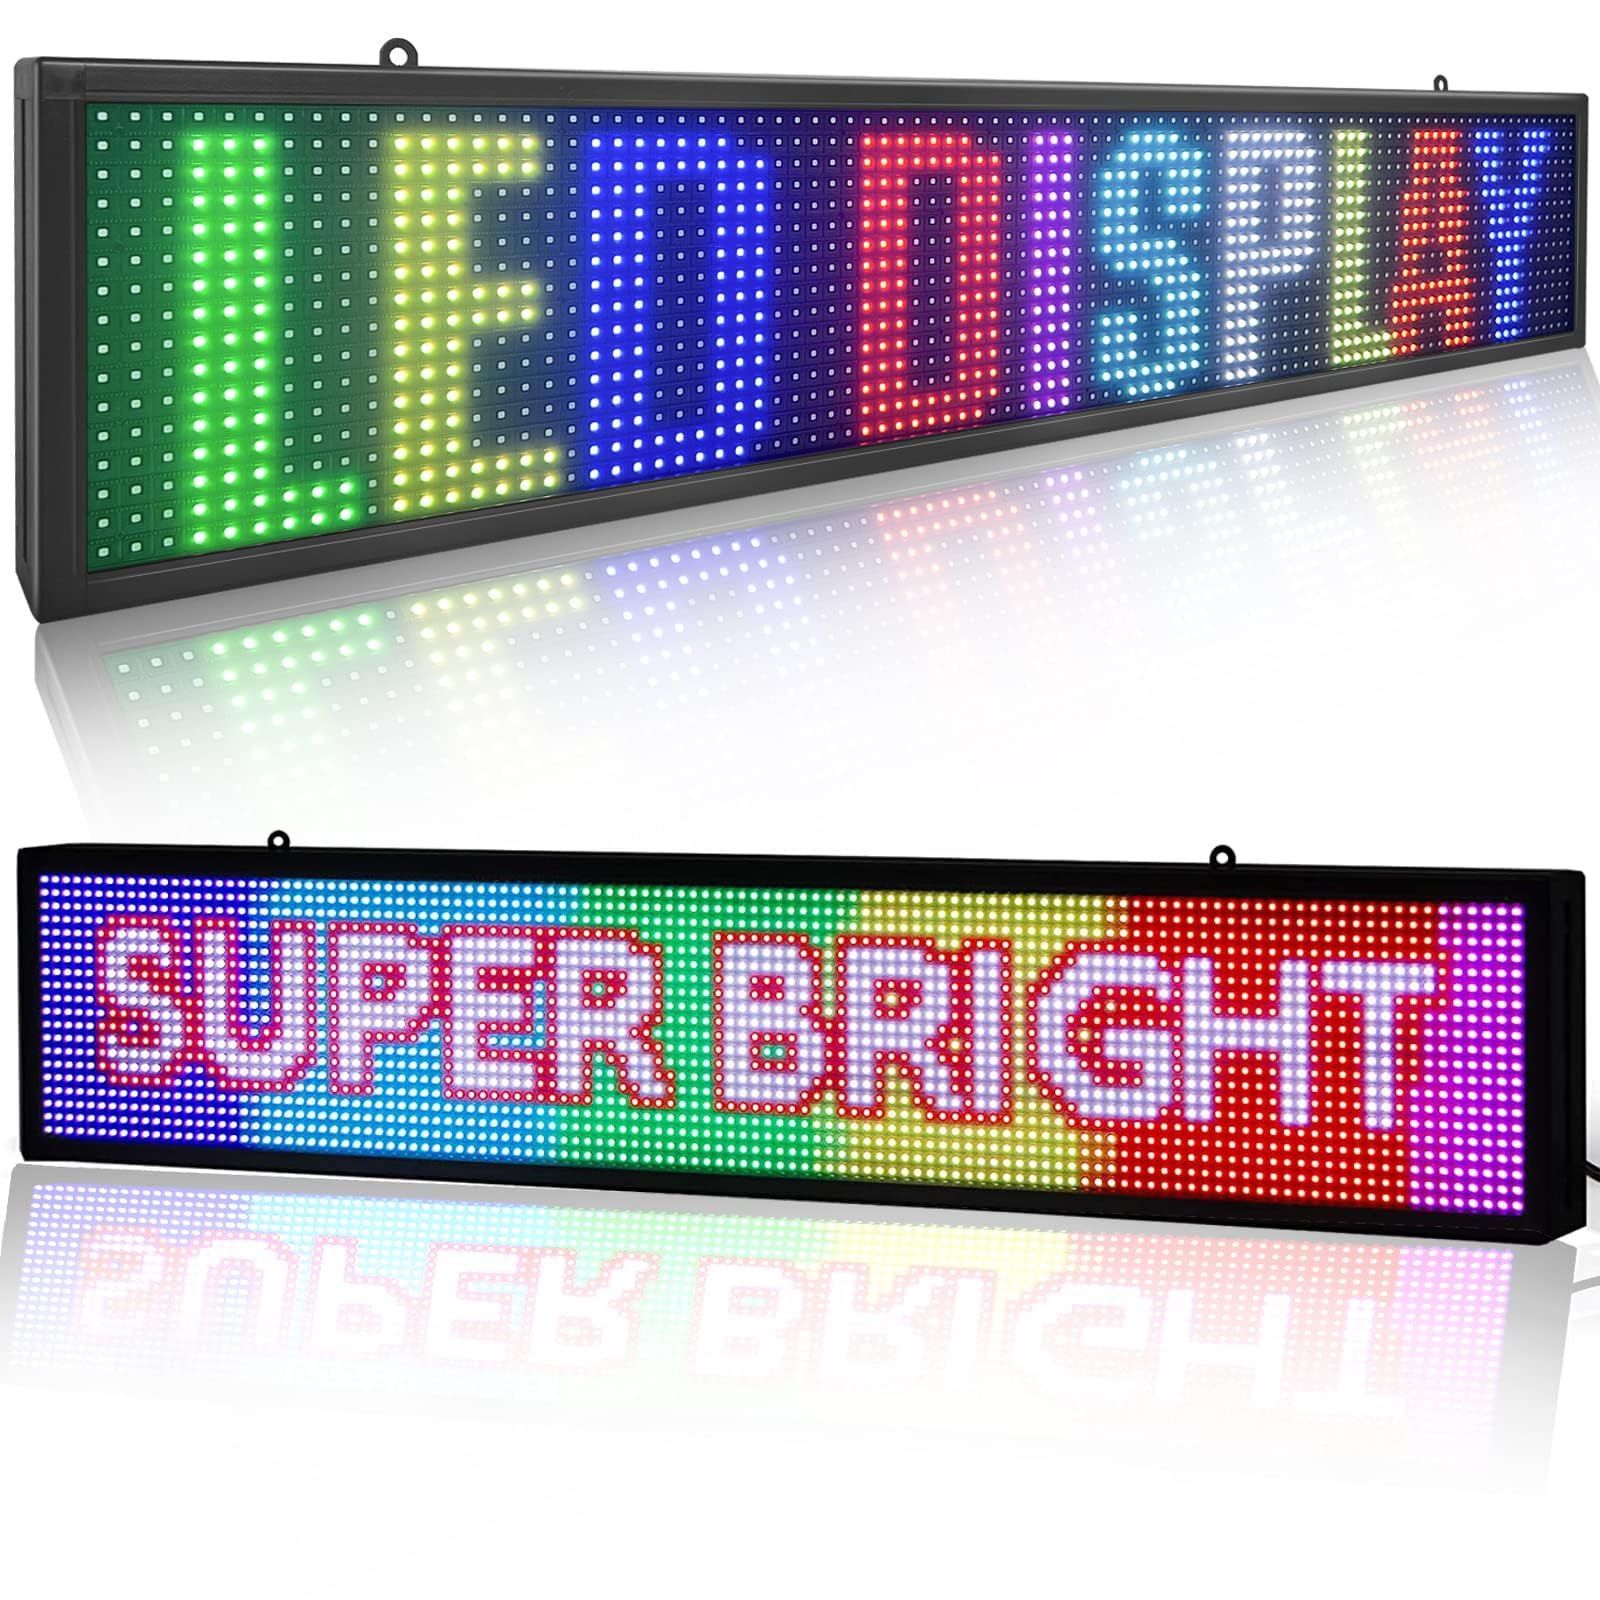 44 x 11ピ 高輝度 P10 LED電光掲示板 - 薄型、軽量で、 LEDデジタル 